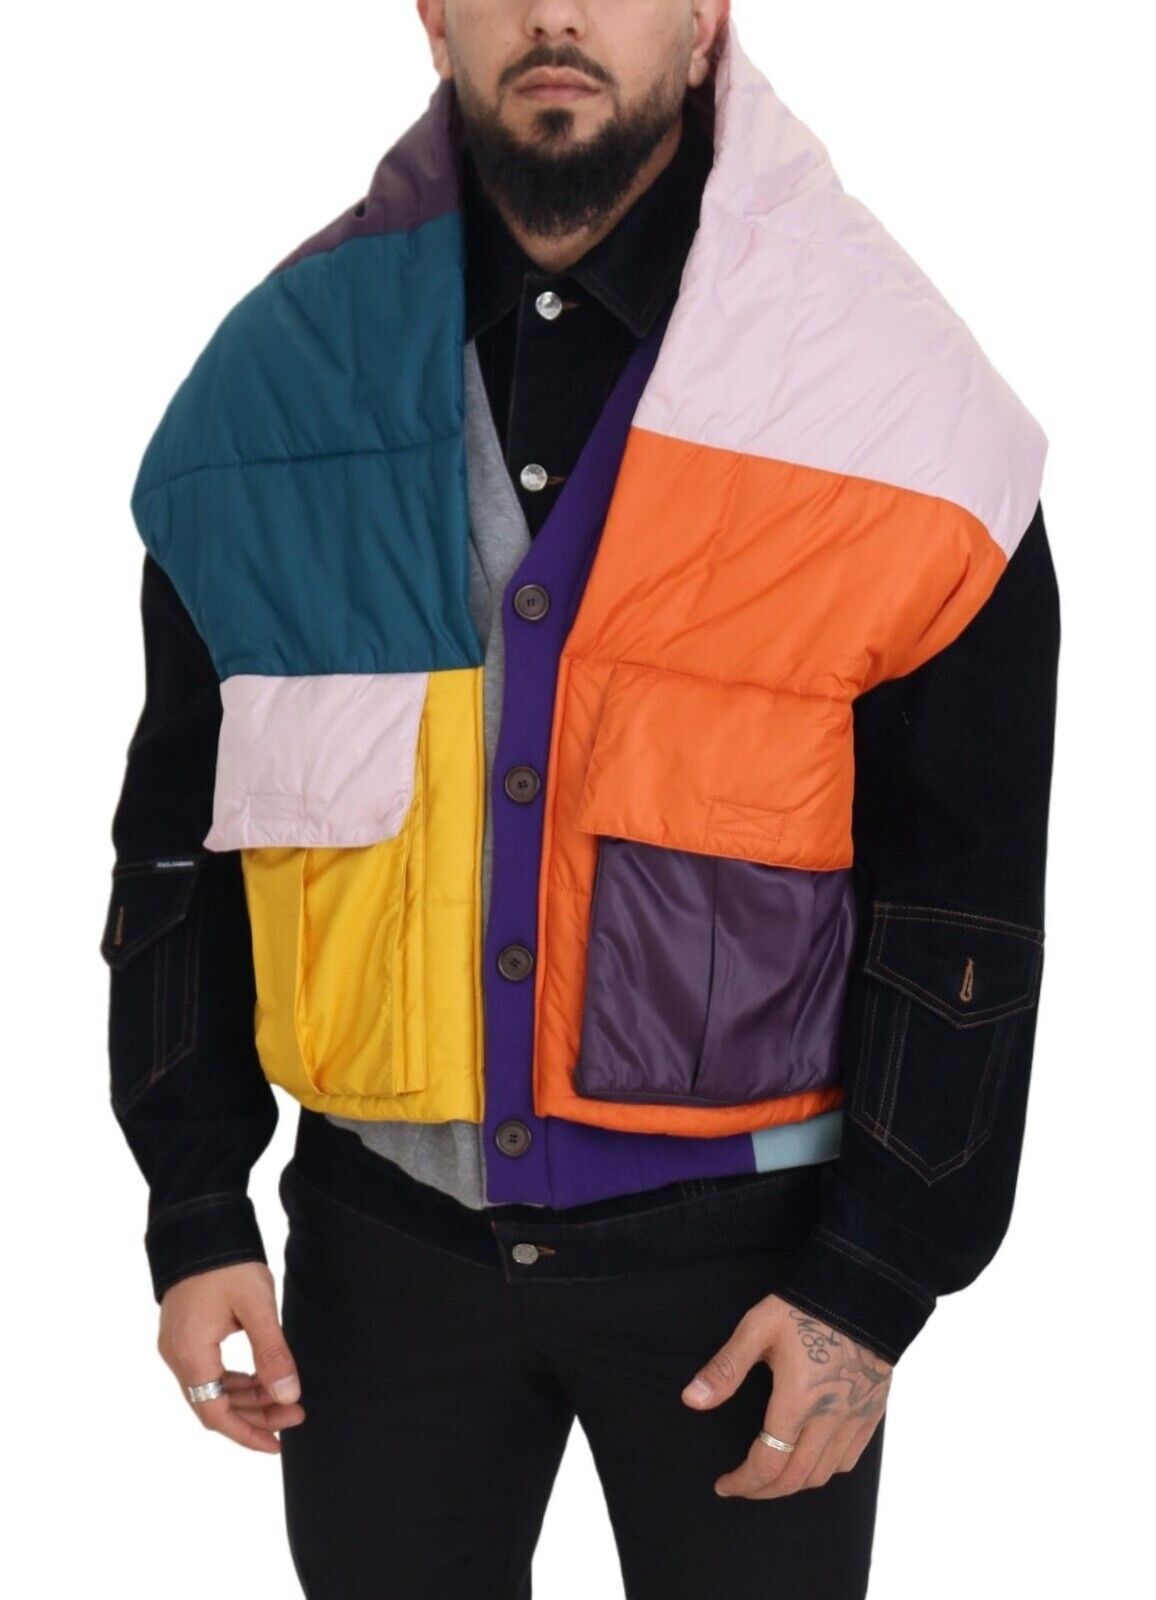 Dolce & Gabbana Eclectic Bomber Jacket Menswear Marvel